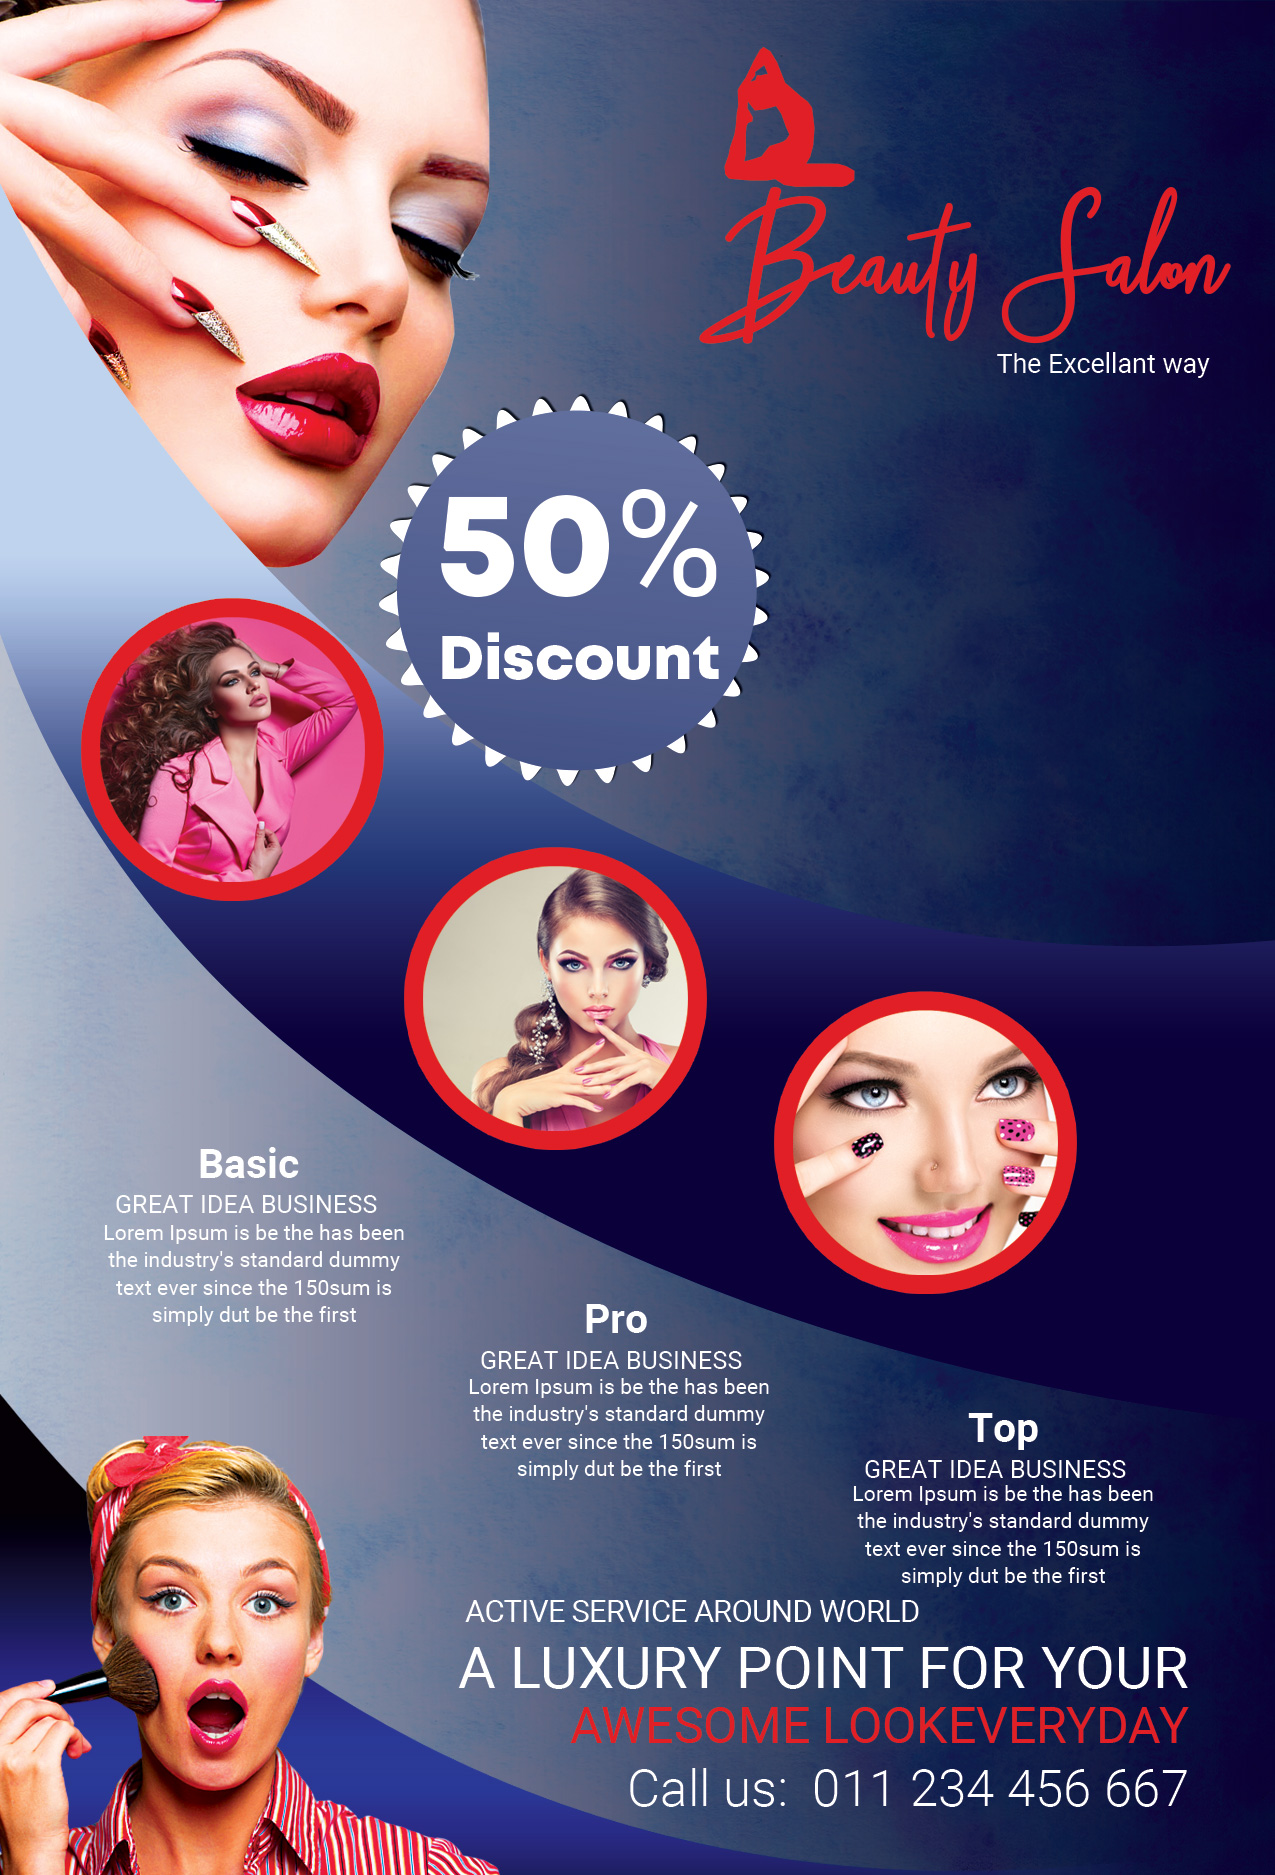 MakeUp Beauty Salon Free PSD Flyer Template by StudioFlyers on Throughout Makeup Artist Flyer Template Free